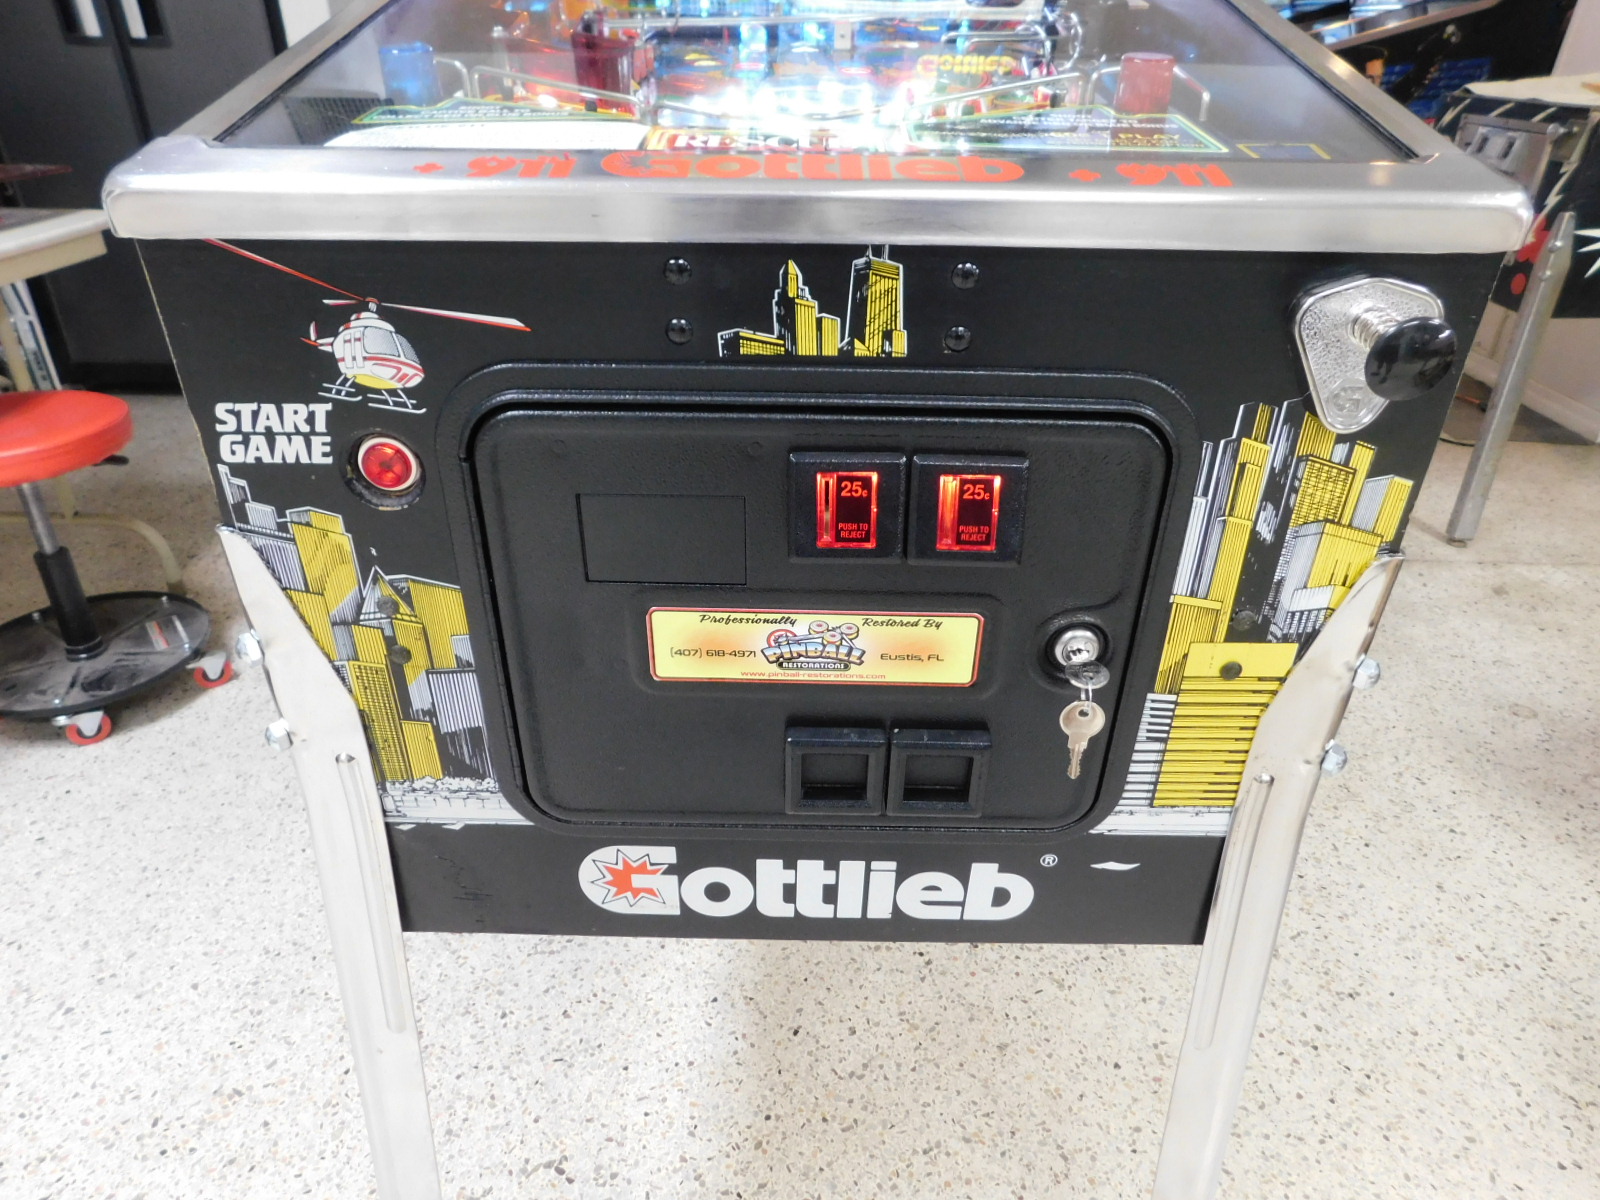 Pinball Restorations, Gottlieb Rescue 911